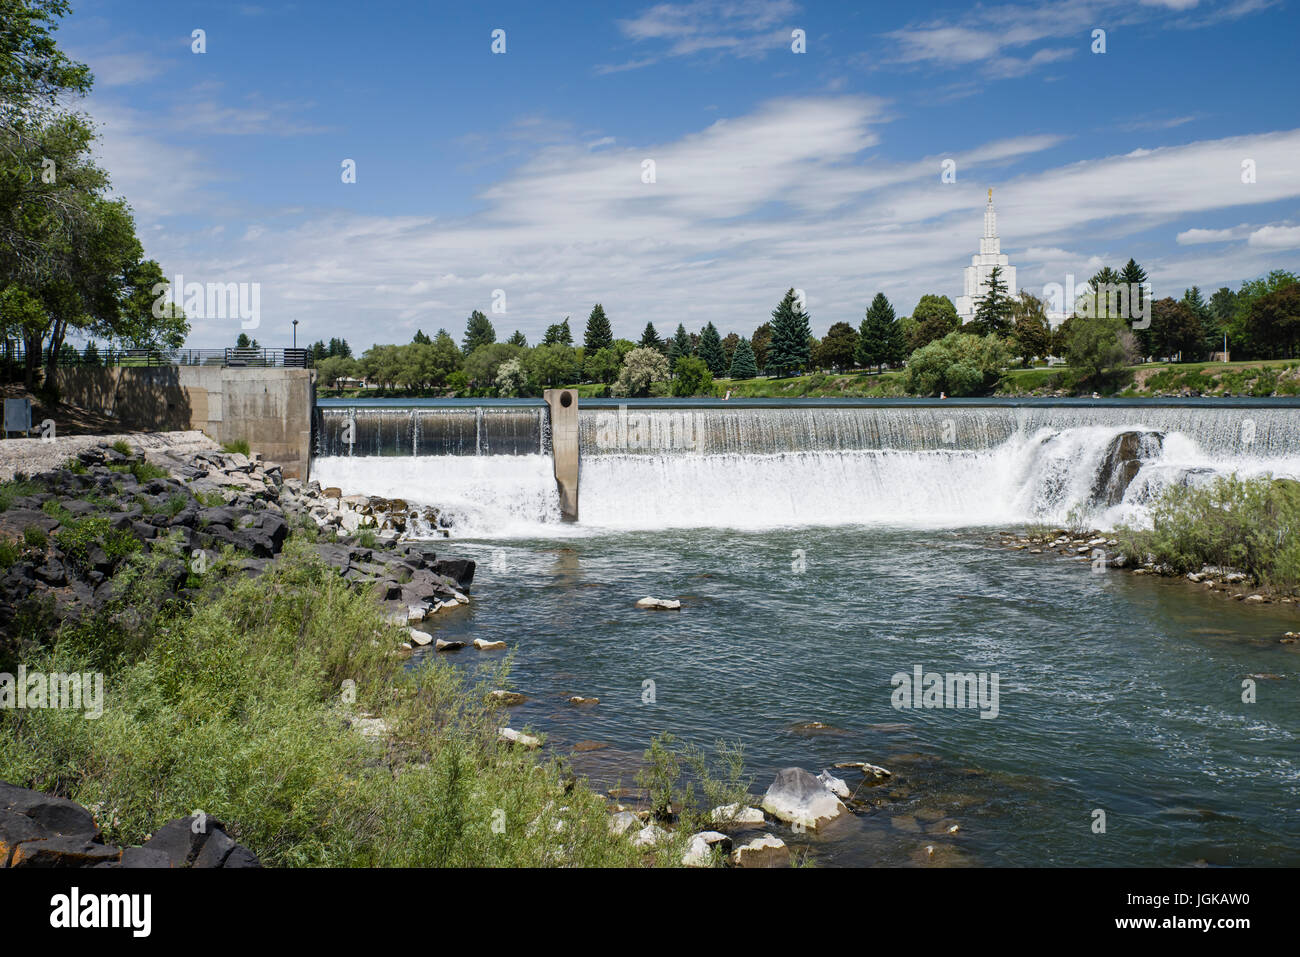 Idaho falls dam hi-res stock photography and images - Alamy